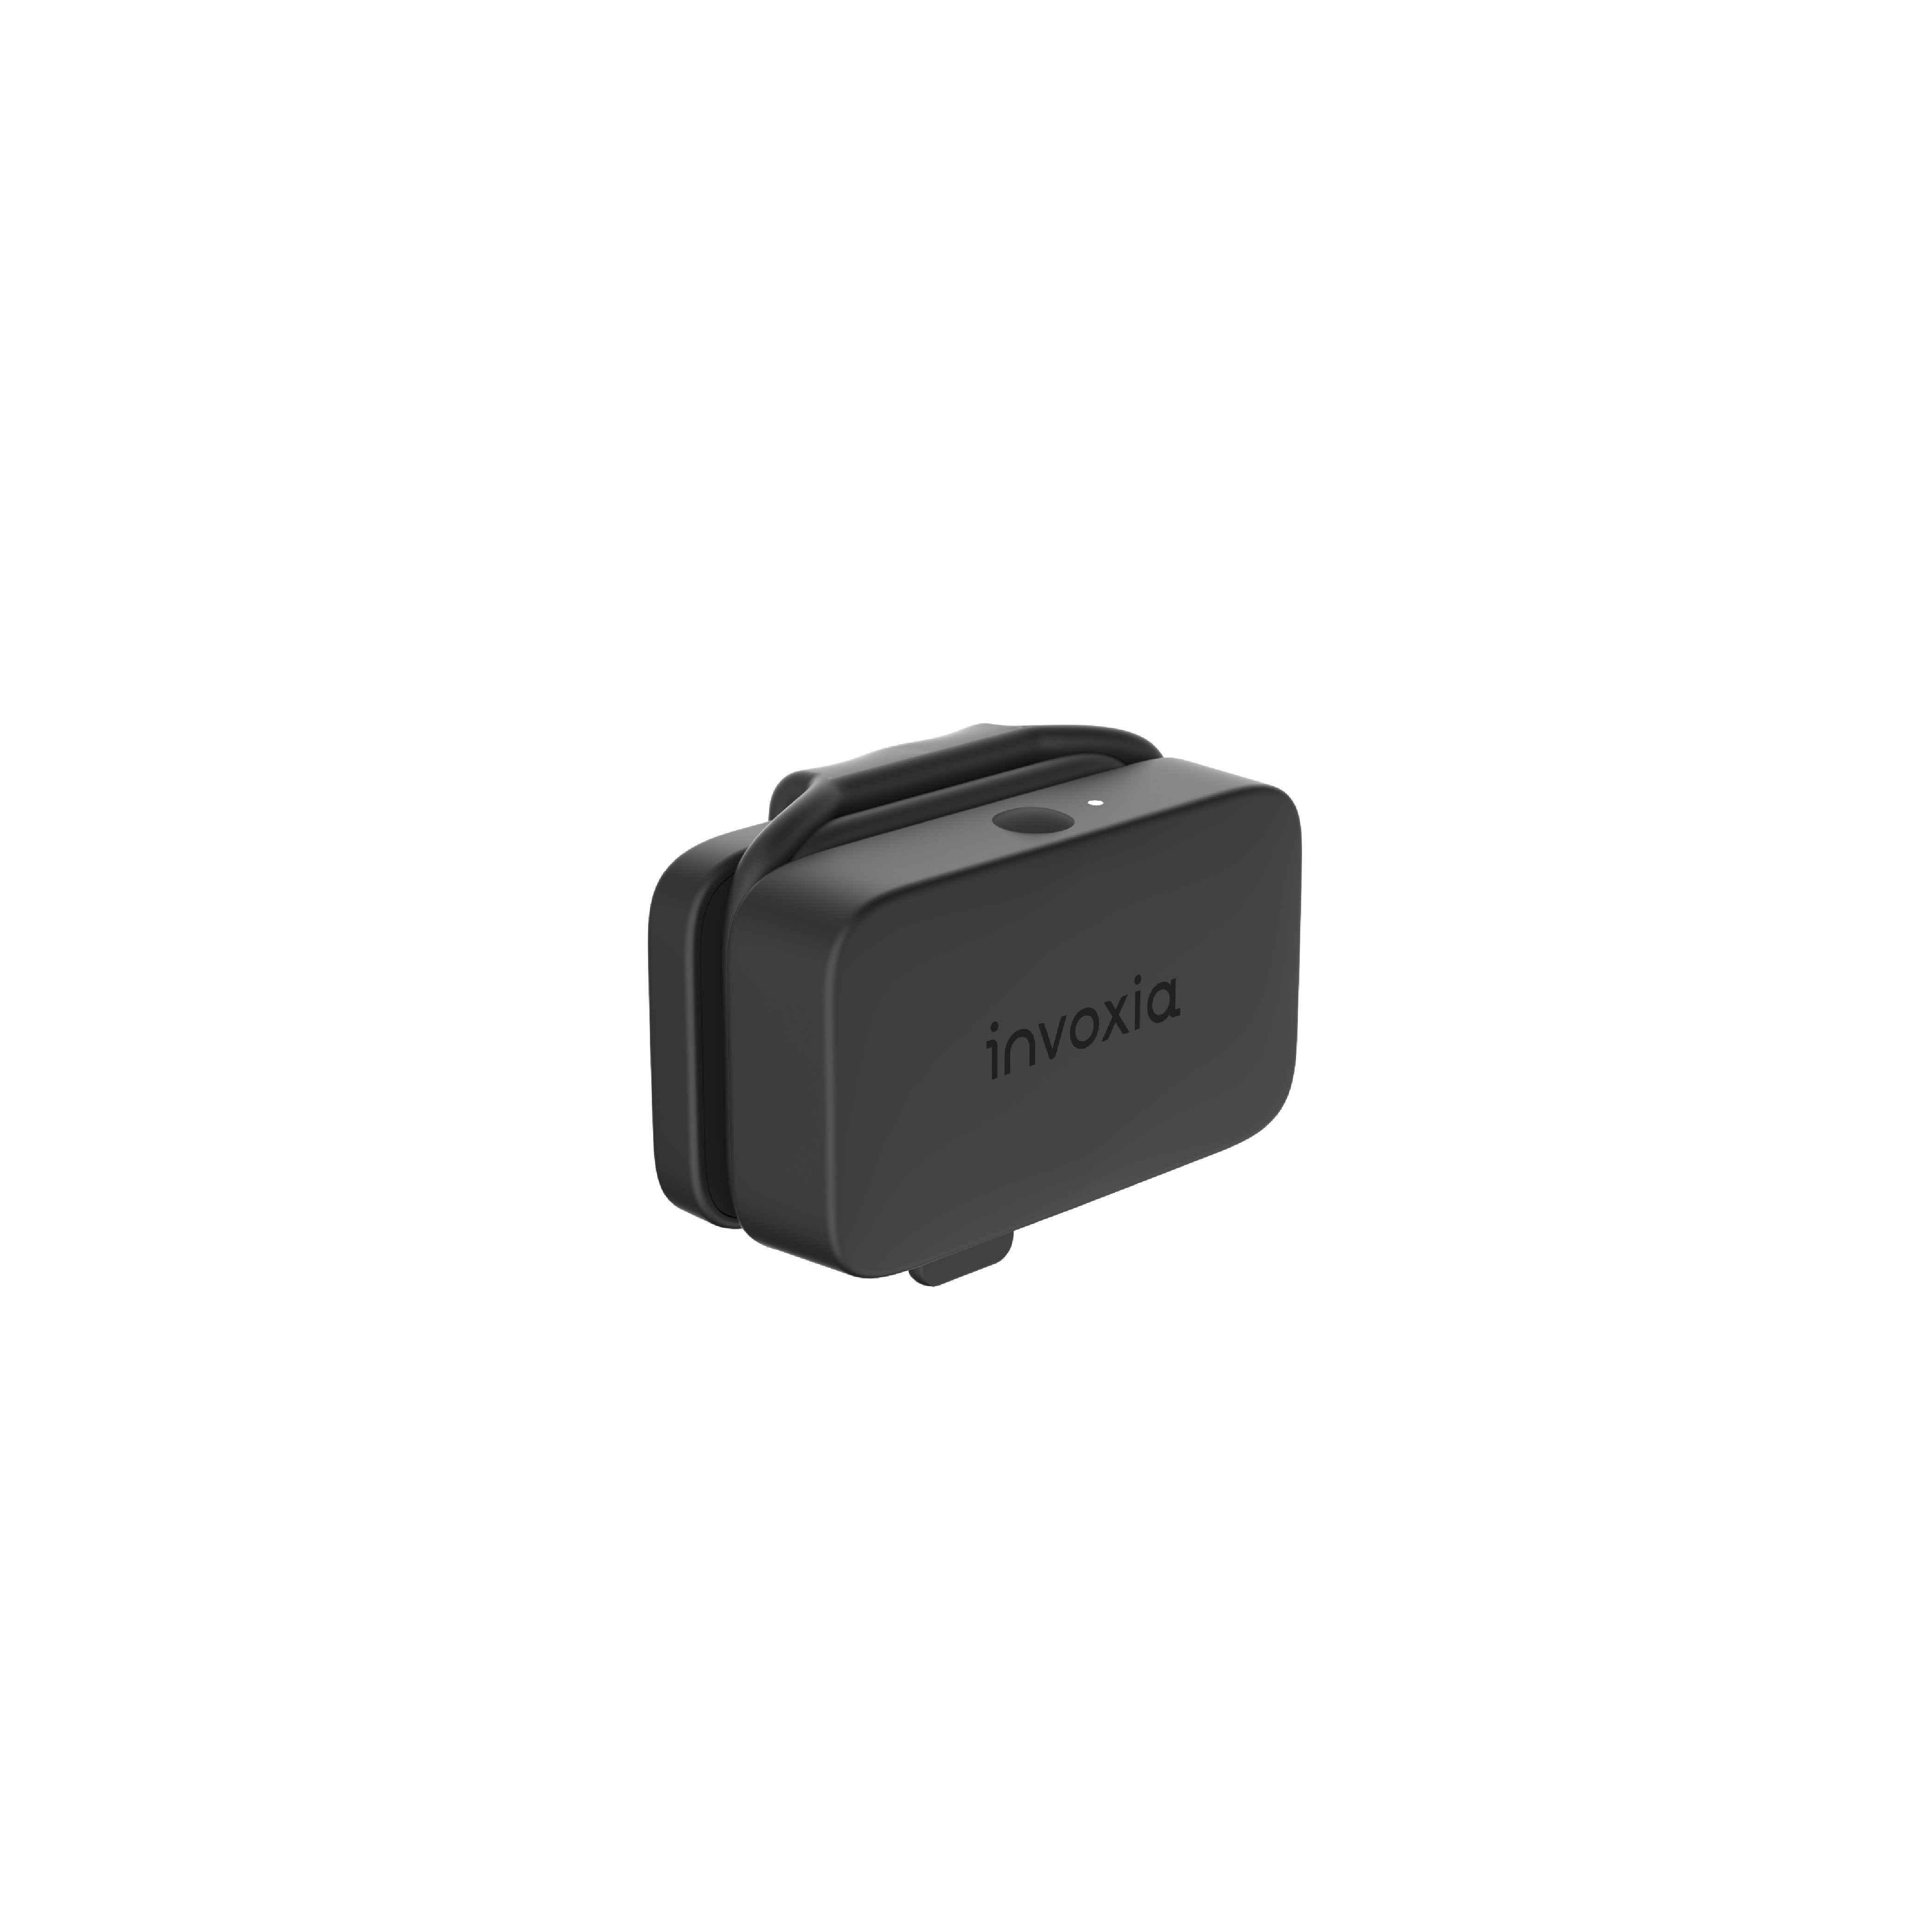 Invoxia Mini Tracker - Waterproof GPS tracker with no SIM card